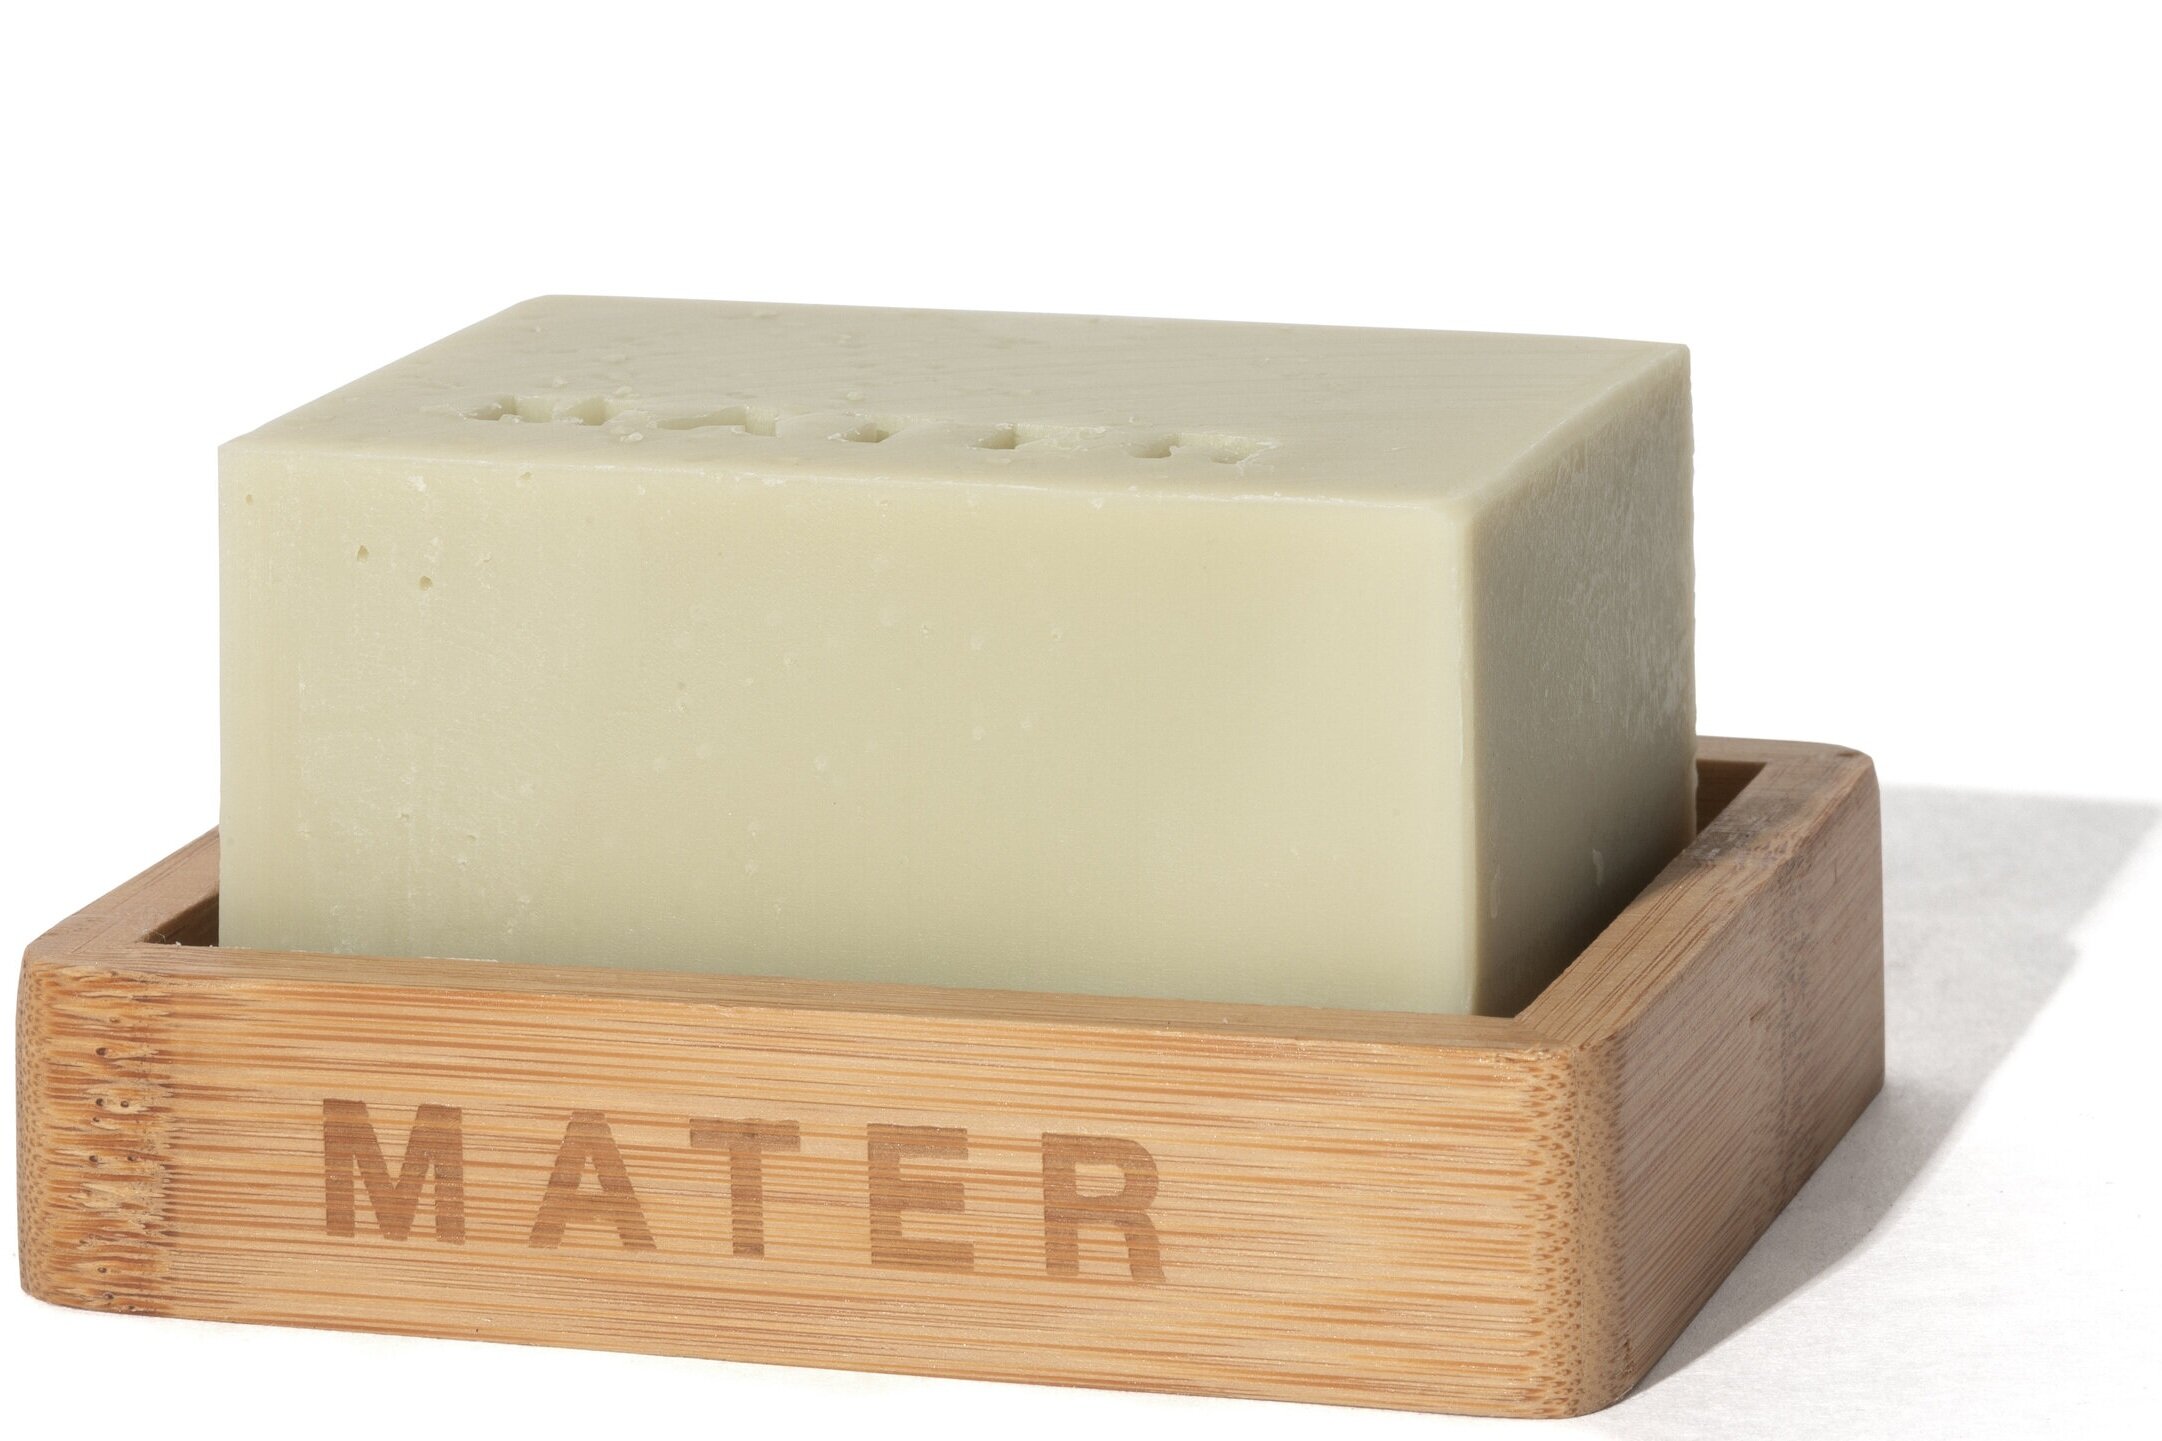 MATER SOAP DISH — MATER SOAP